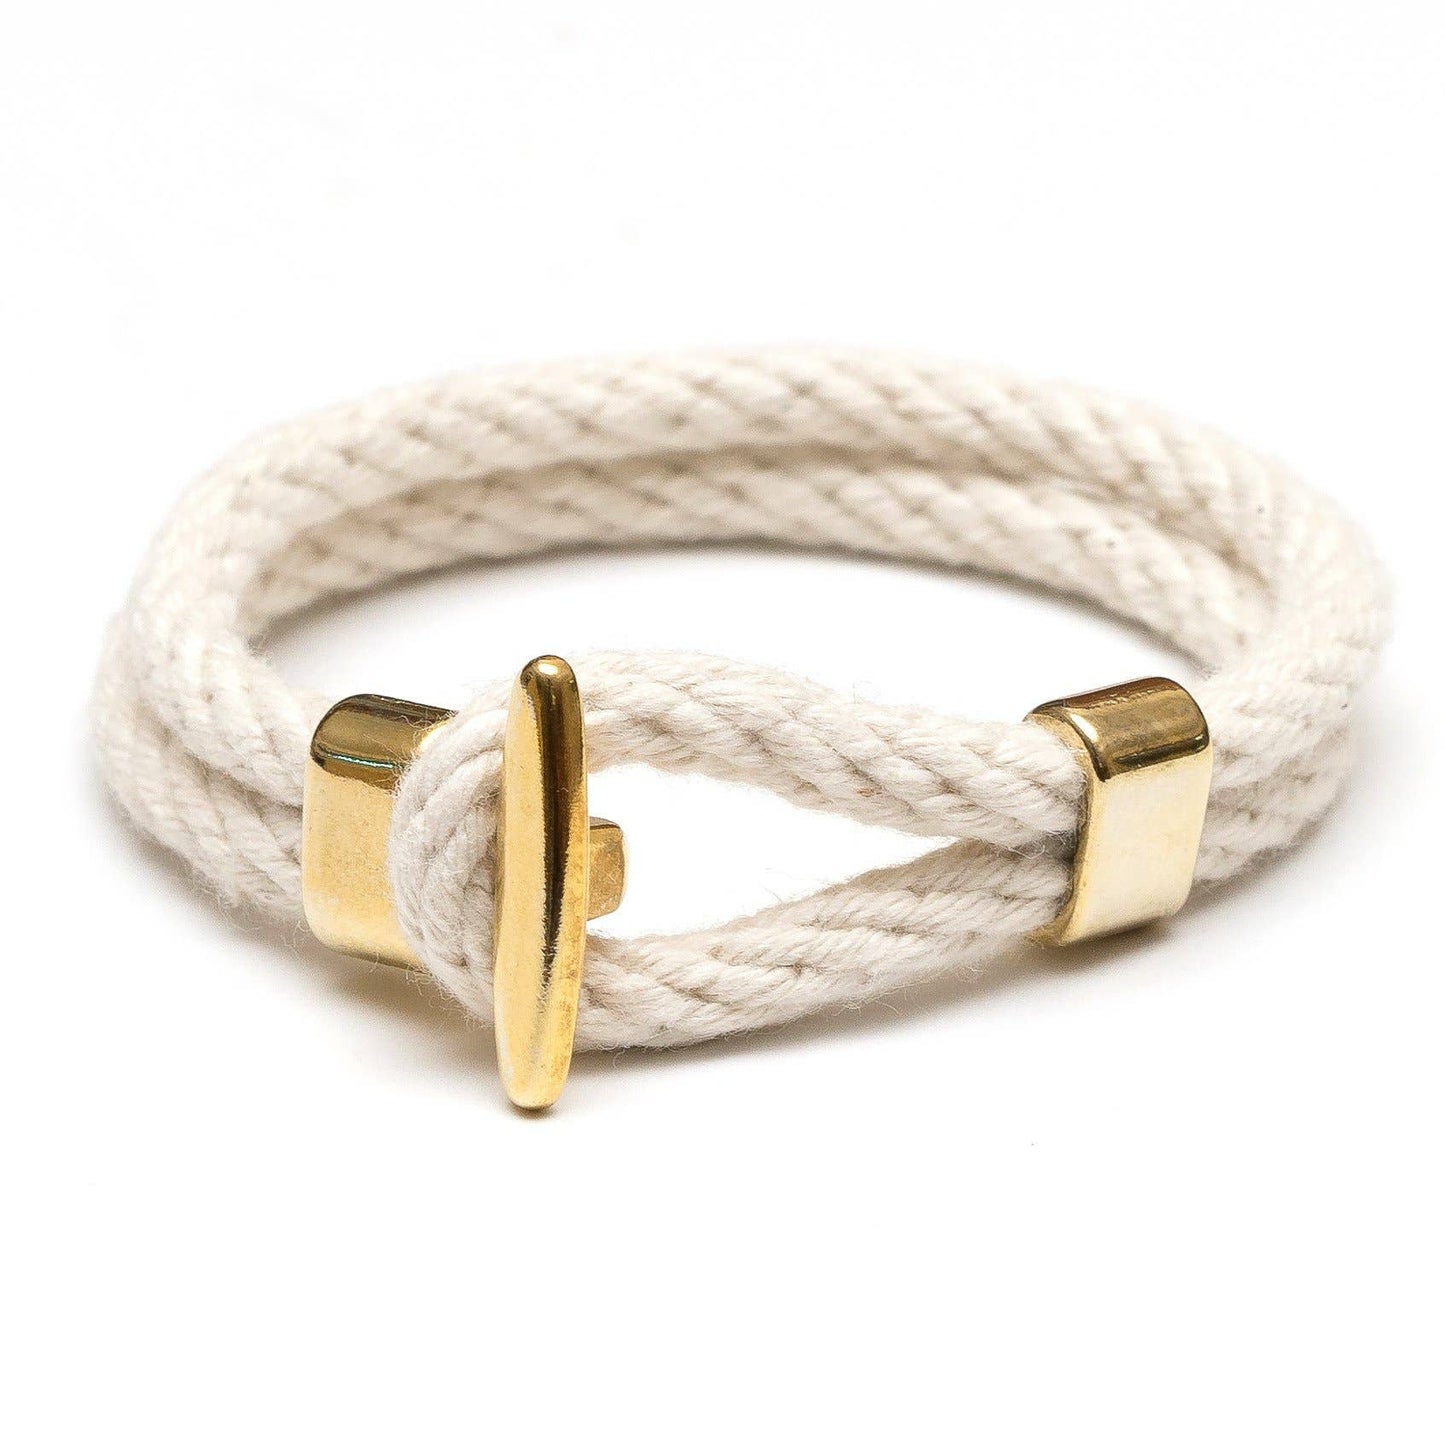 Nautical Bracelets